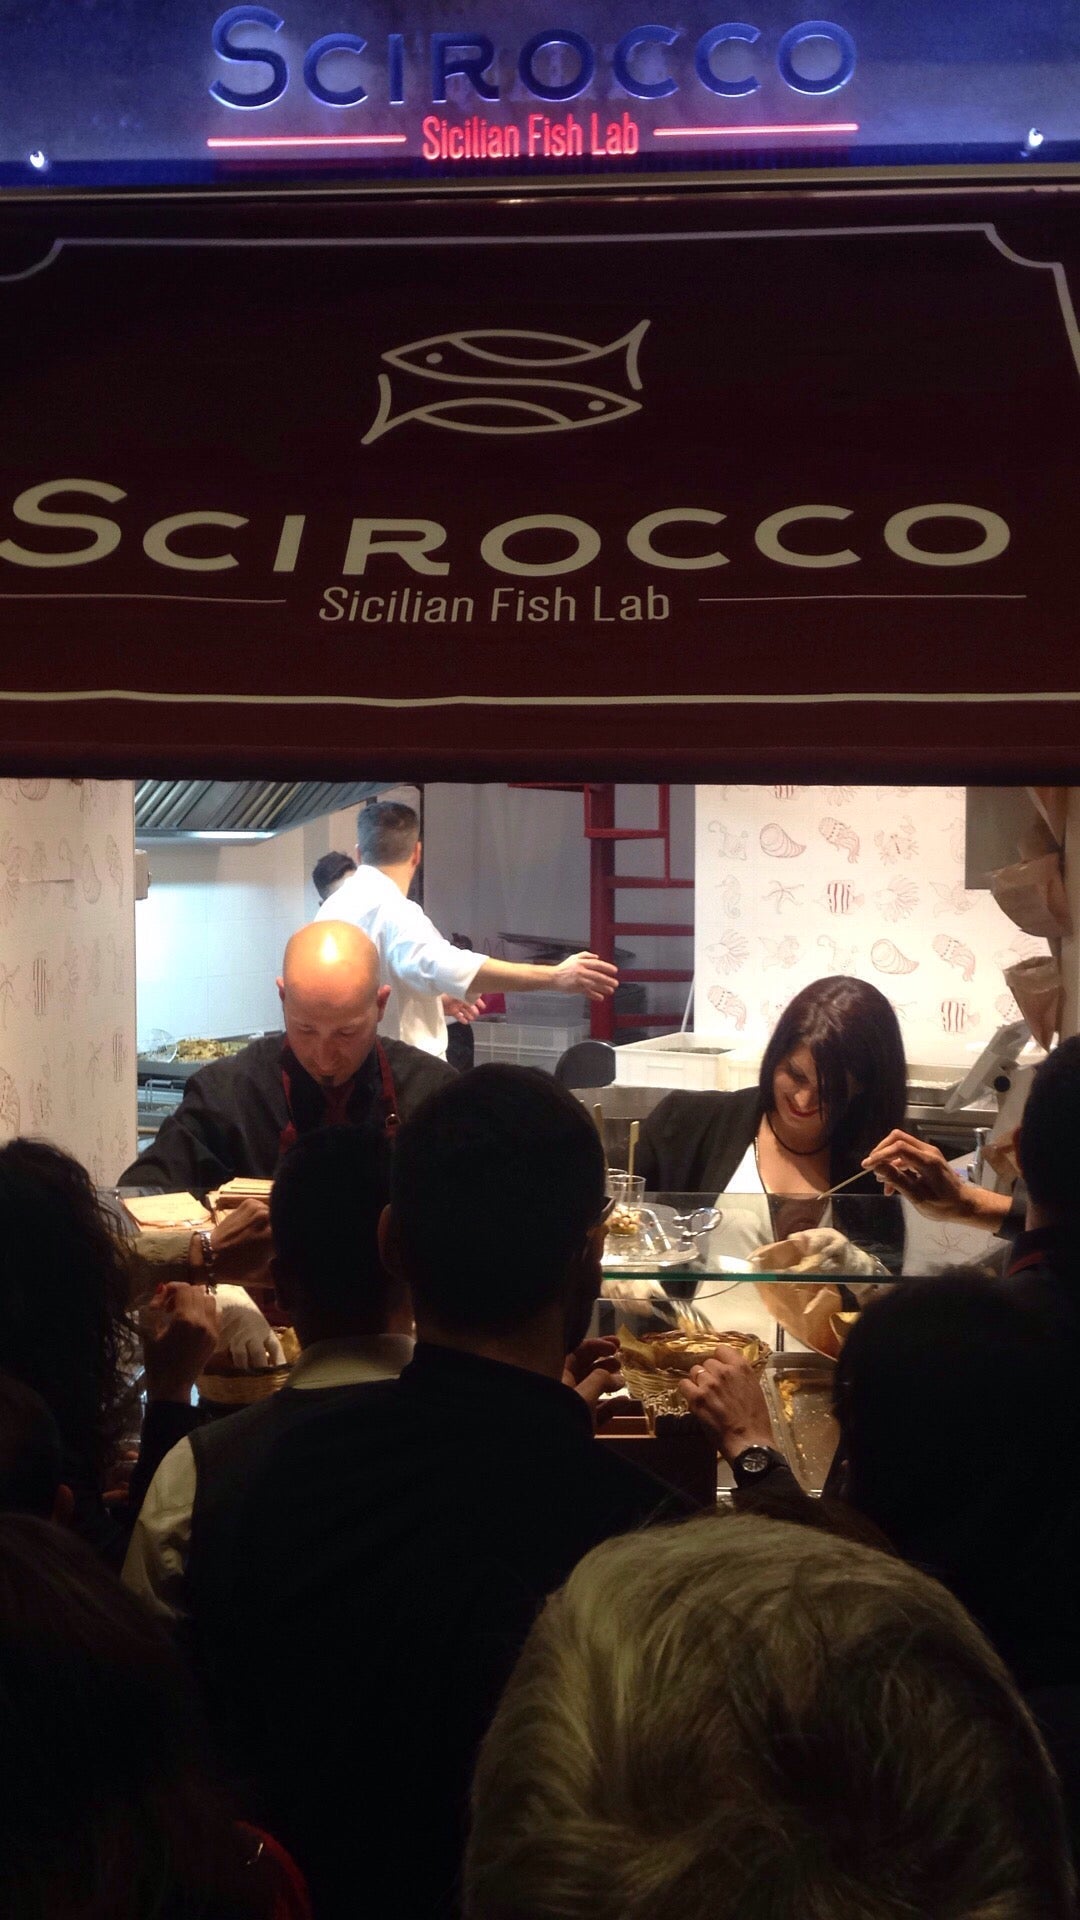 Scirocco Sicilian Fish Lab